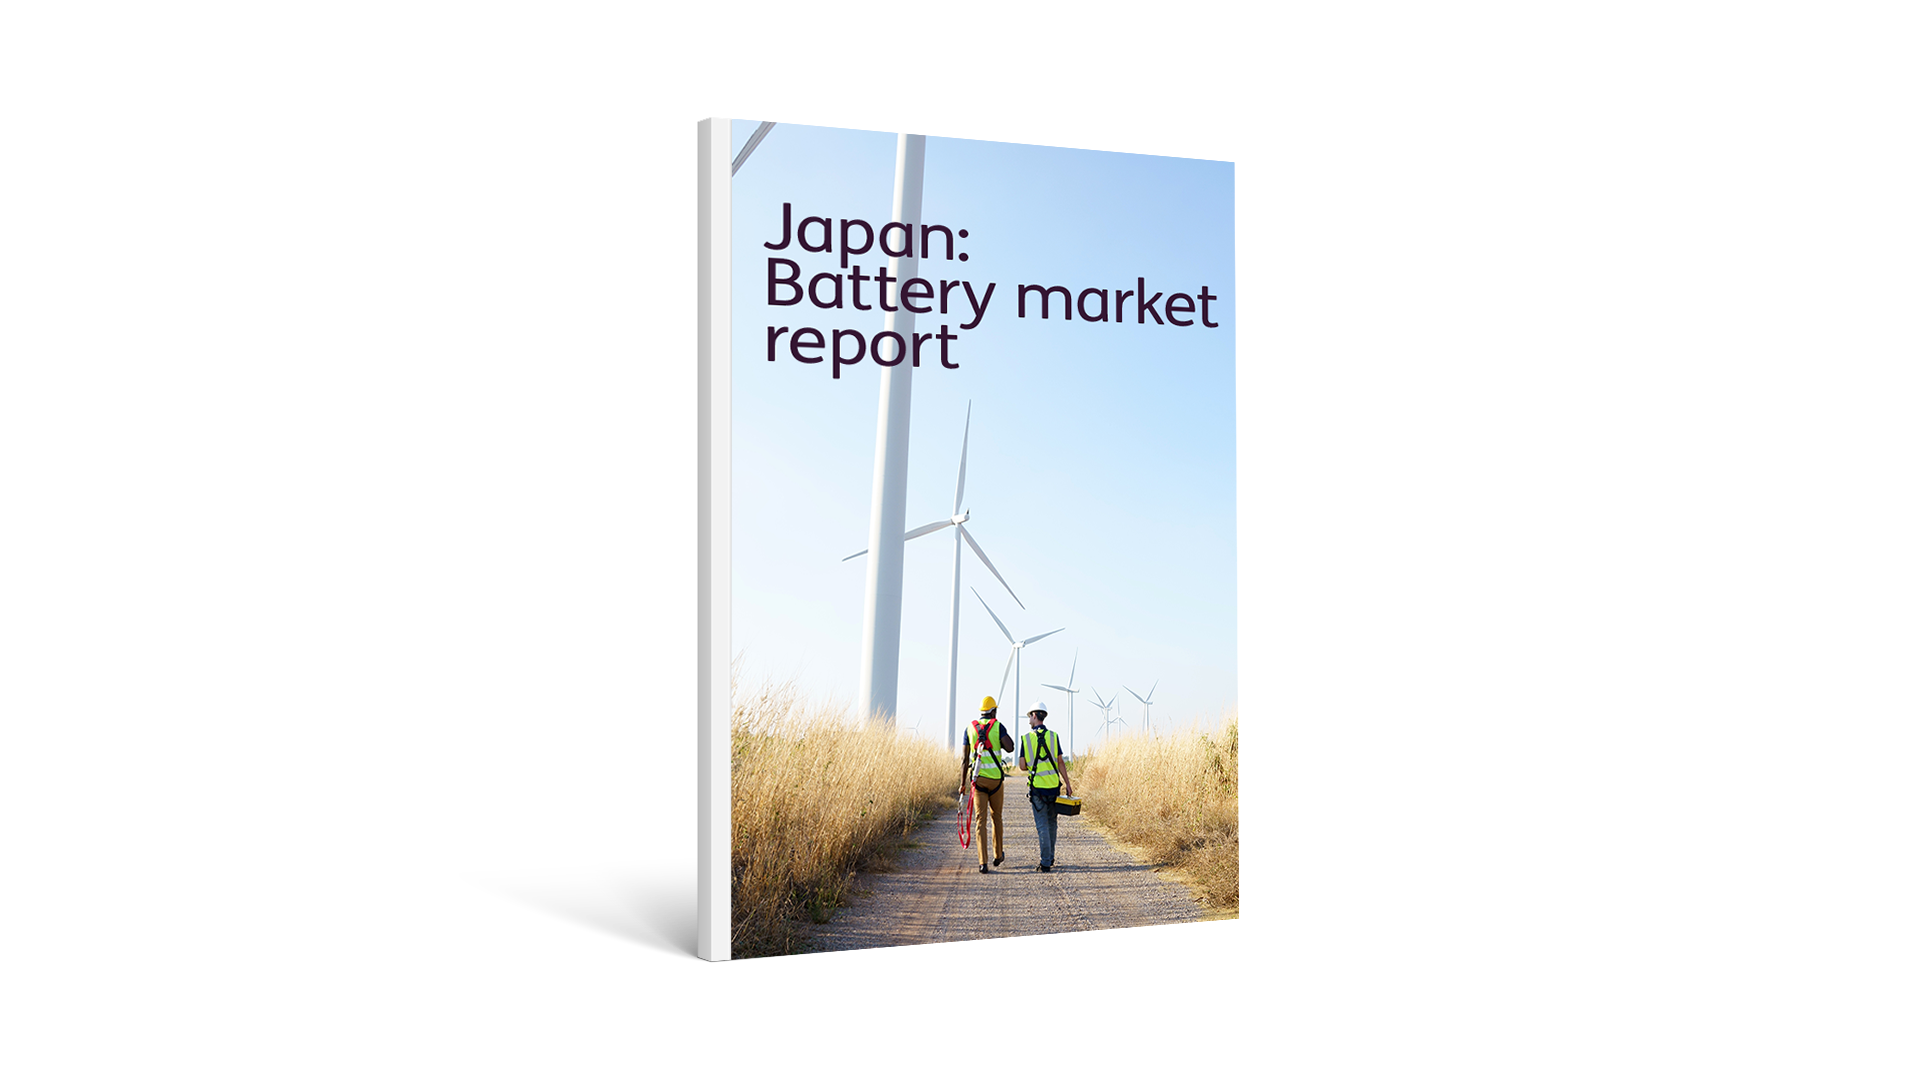 Japan: Battery market report